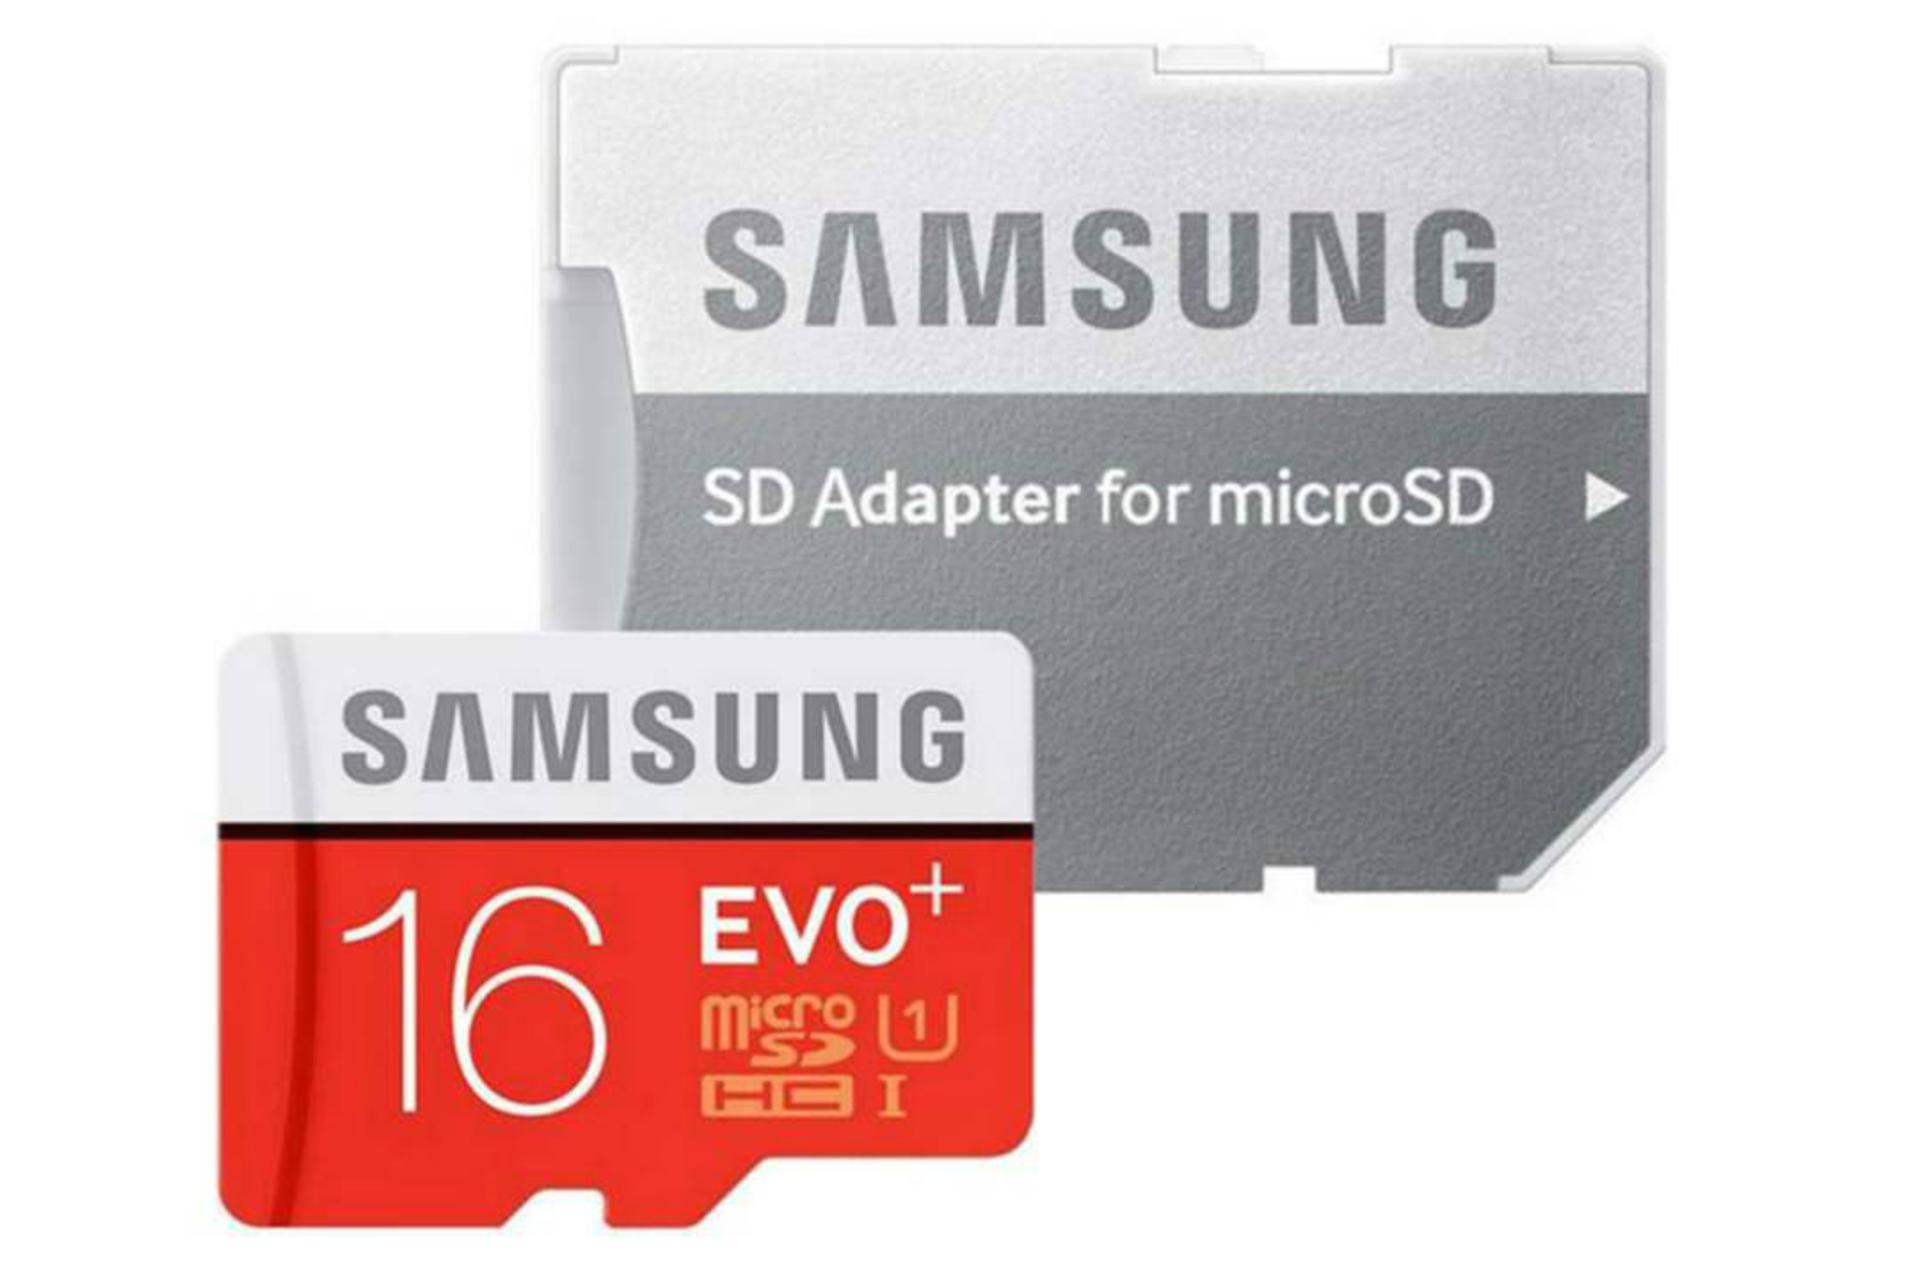 Samsung Evo Plus microSDHC Class 10 UHS-I U1 16GB